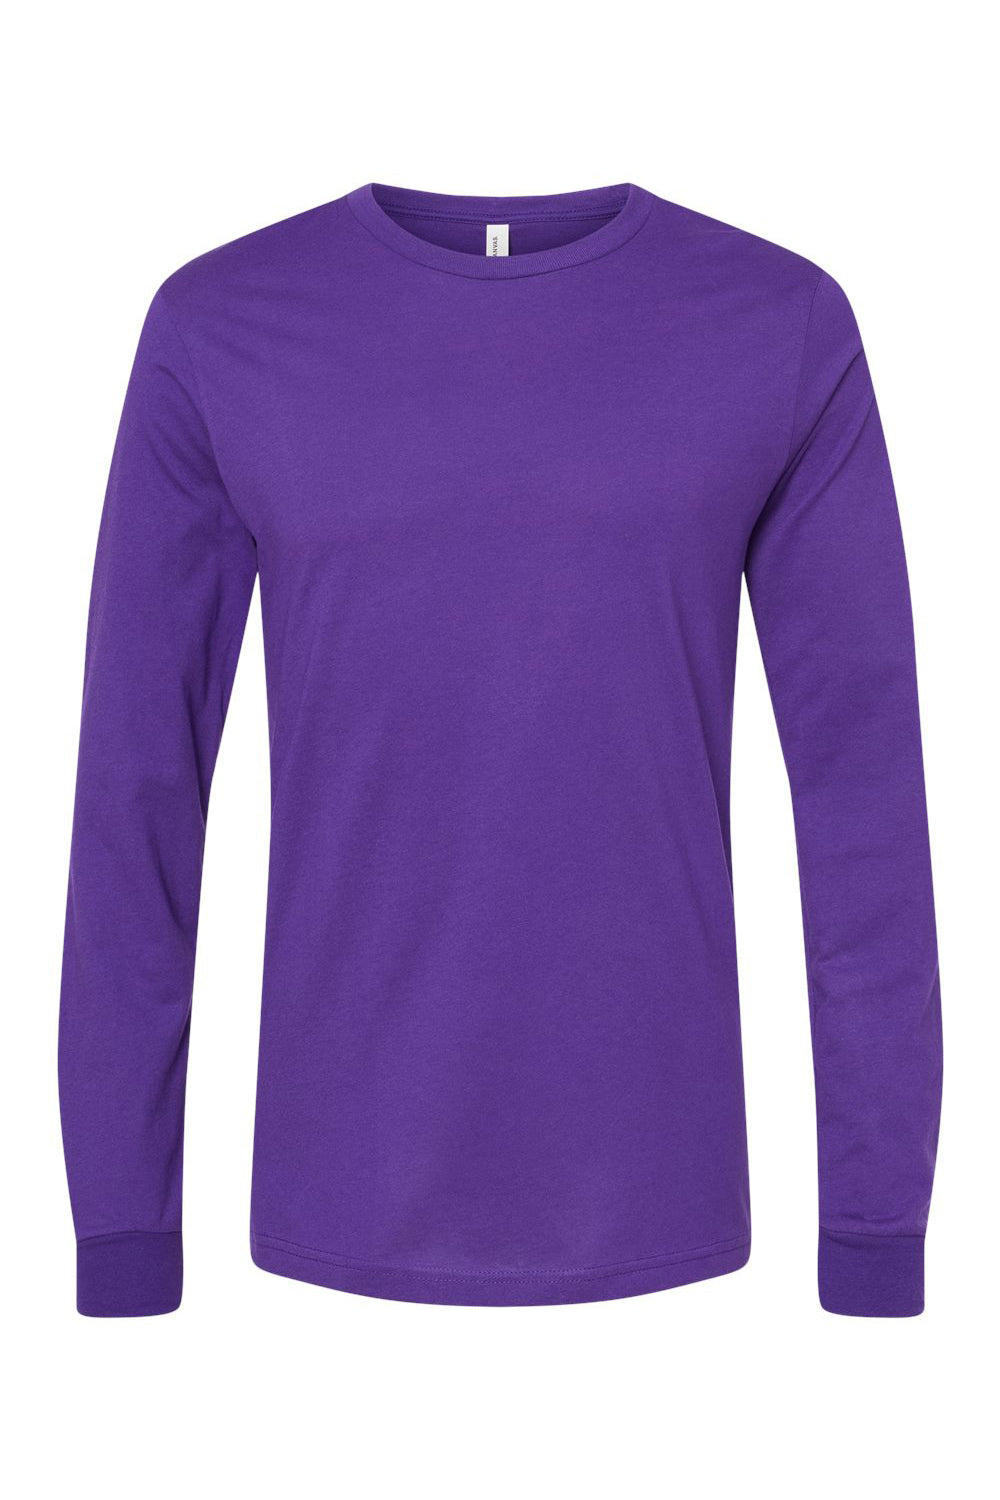 Bella + Canvas BC3501/3501 Mens Jersey Long Sleeve Crewneck T-Shirt Team Purple Flat Front